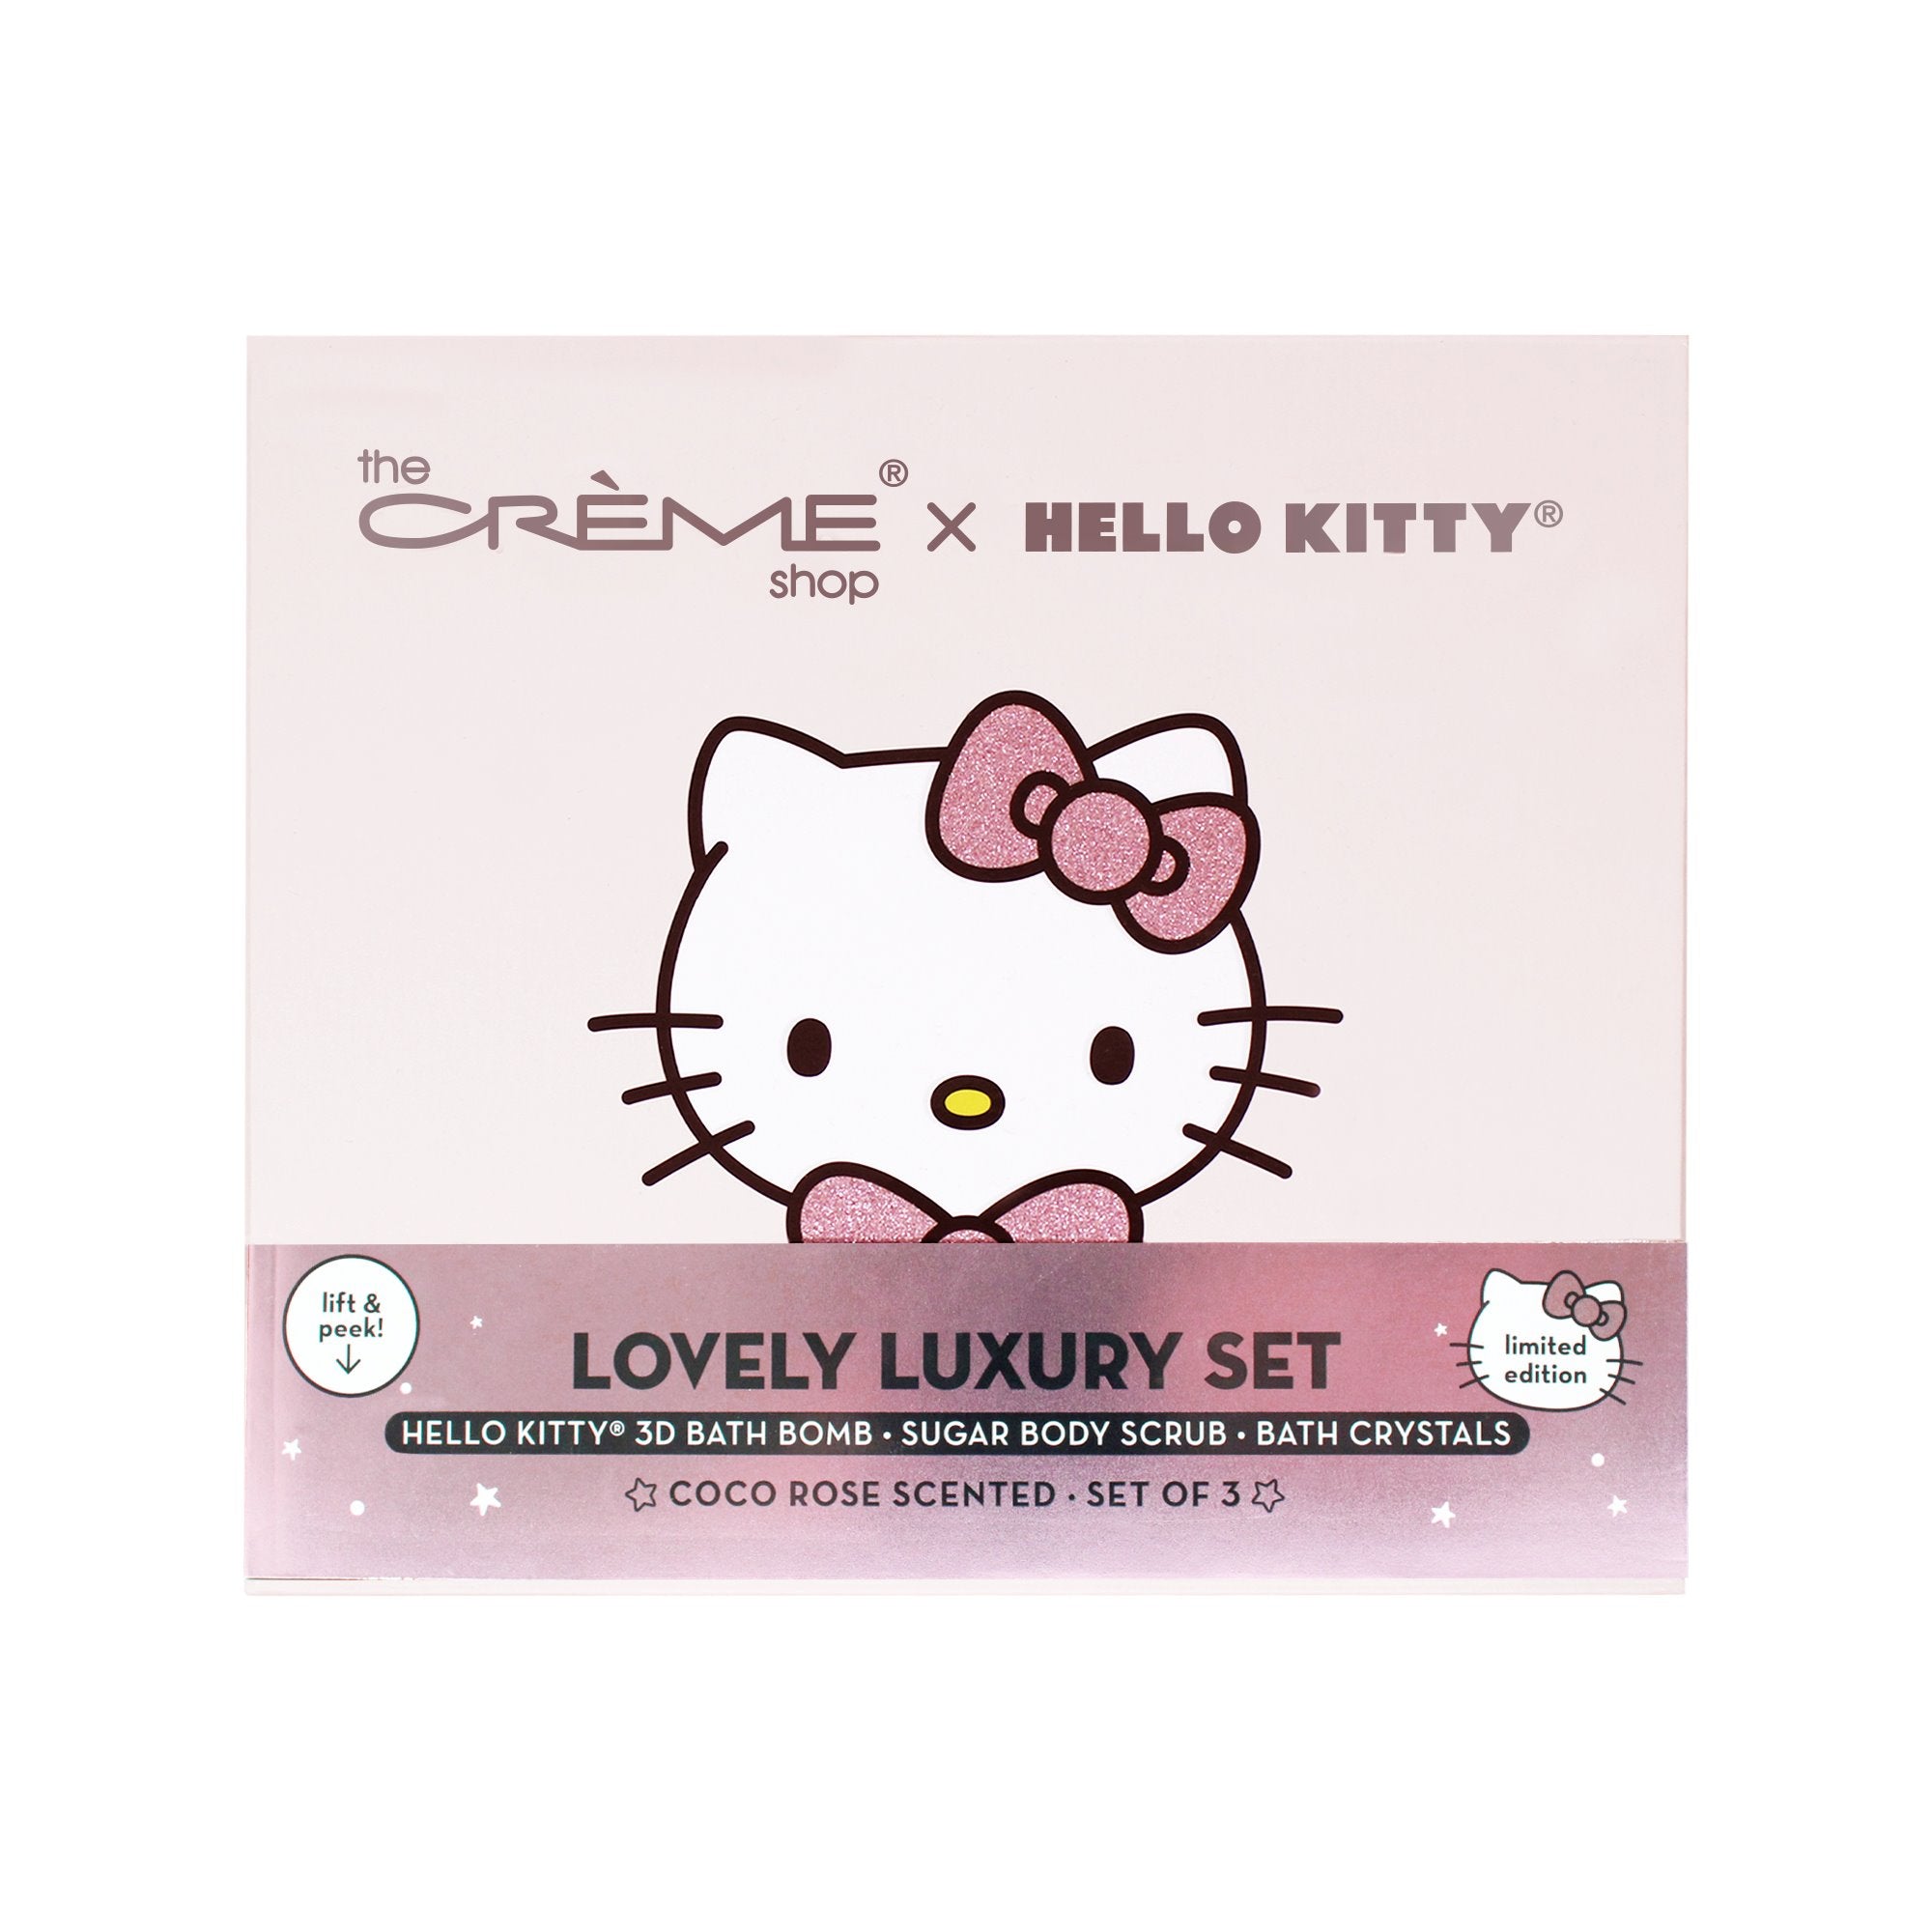 The Crème Shop x Hello Kitty – Lovely Luxury Spa Set